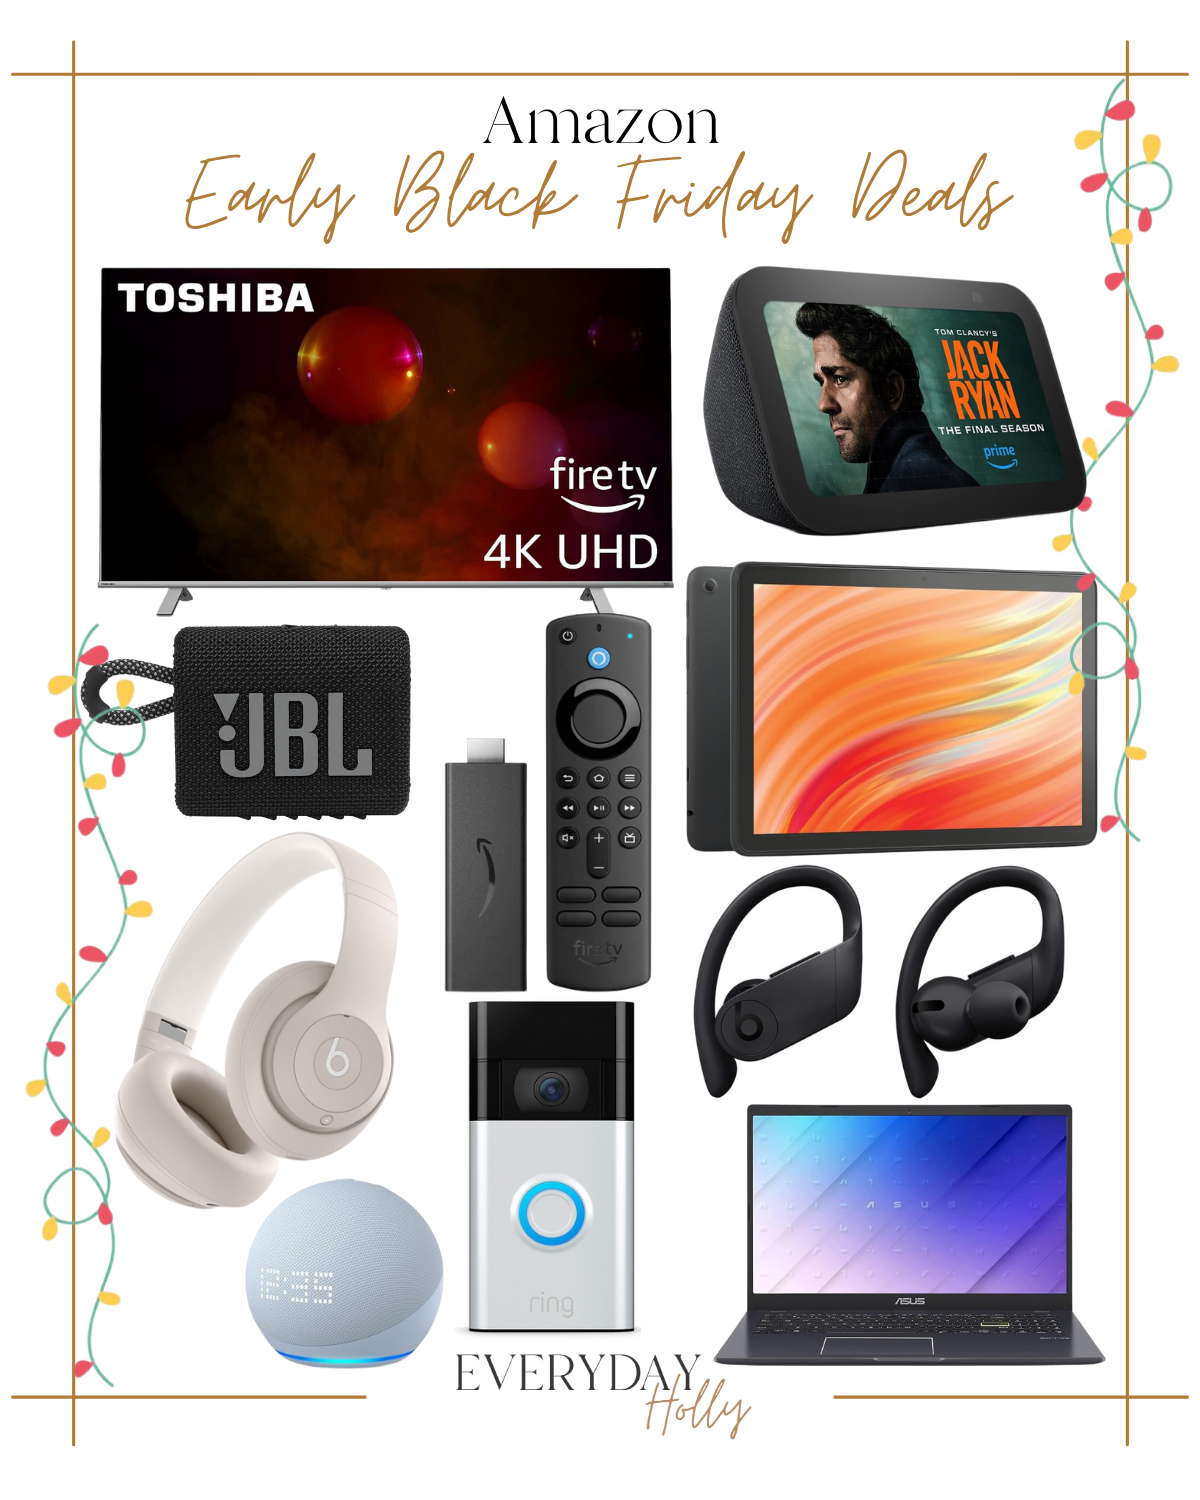 shop early black friday deals now | #shop #blackfriday #deals #earlyblackfriday #shopping #gifts #amazon #tech #electronics #TV #headphones